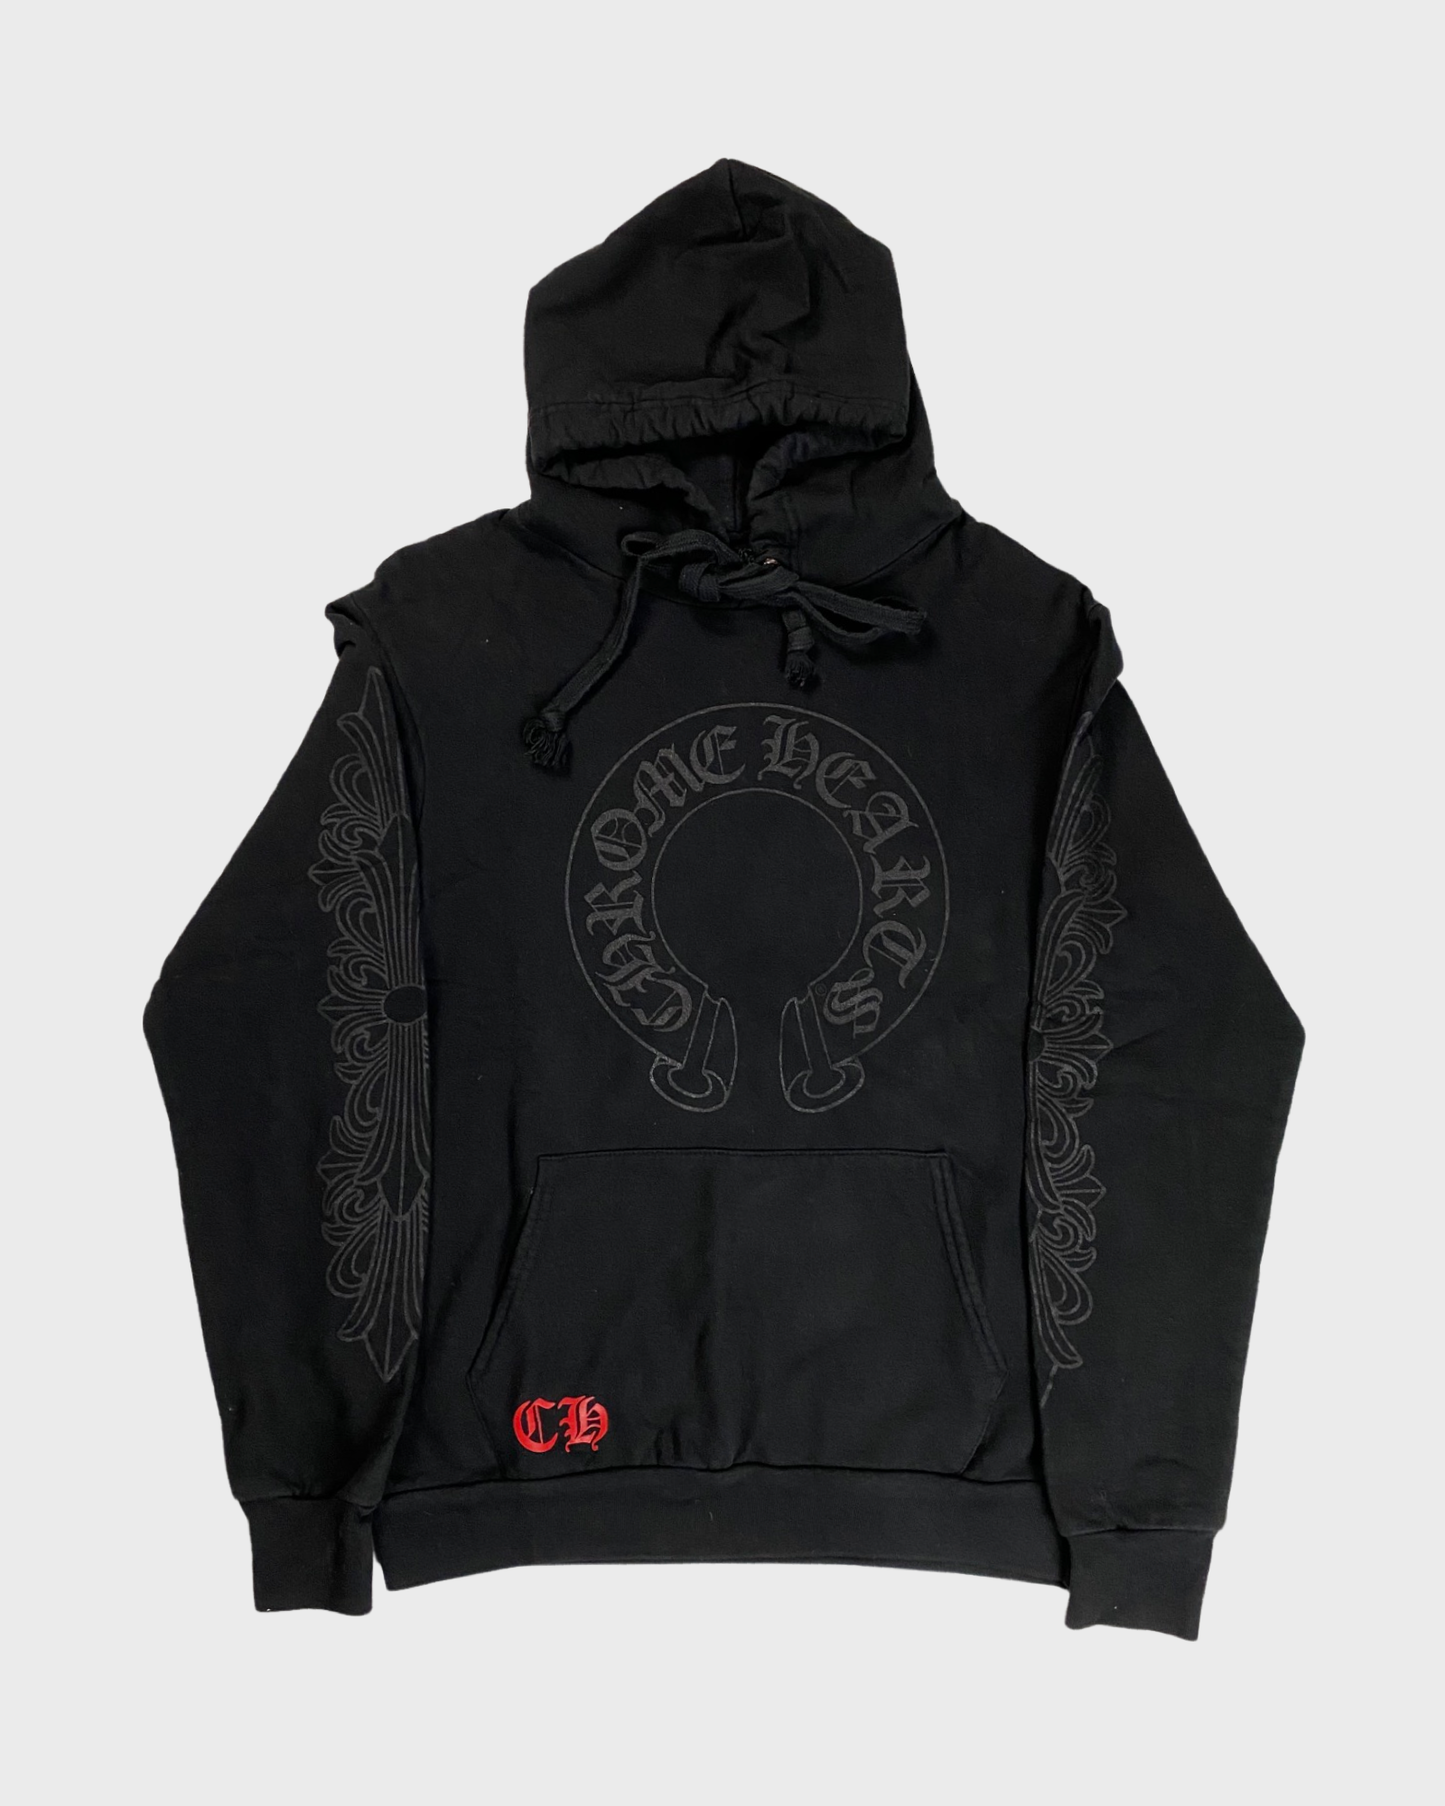 Chrome Hearts x Mattyboy floral chomper hoodie in black SZ:S|M